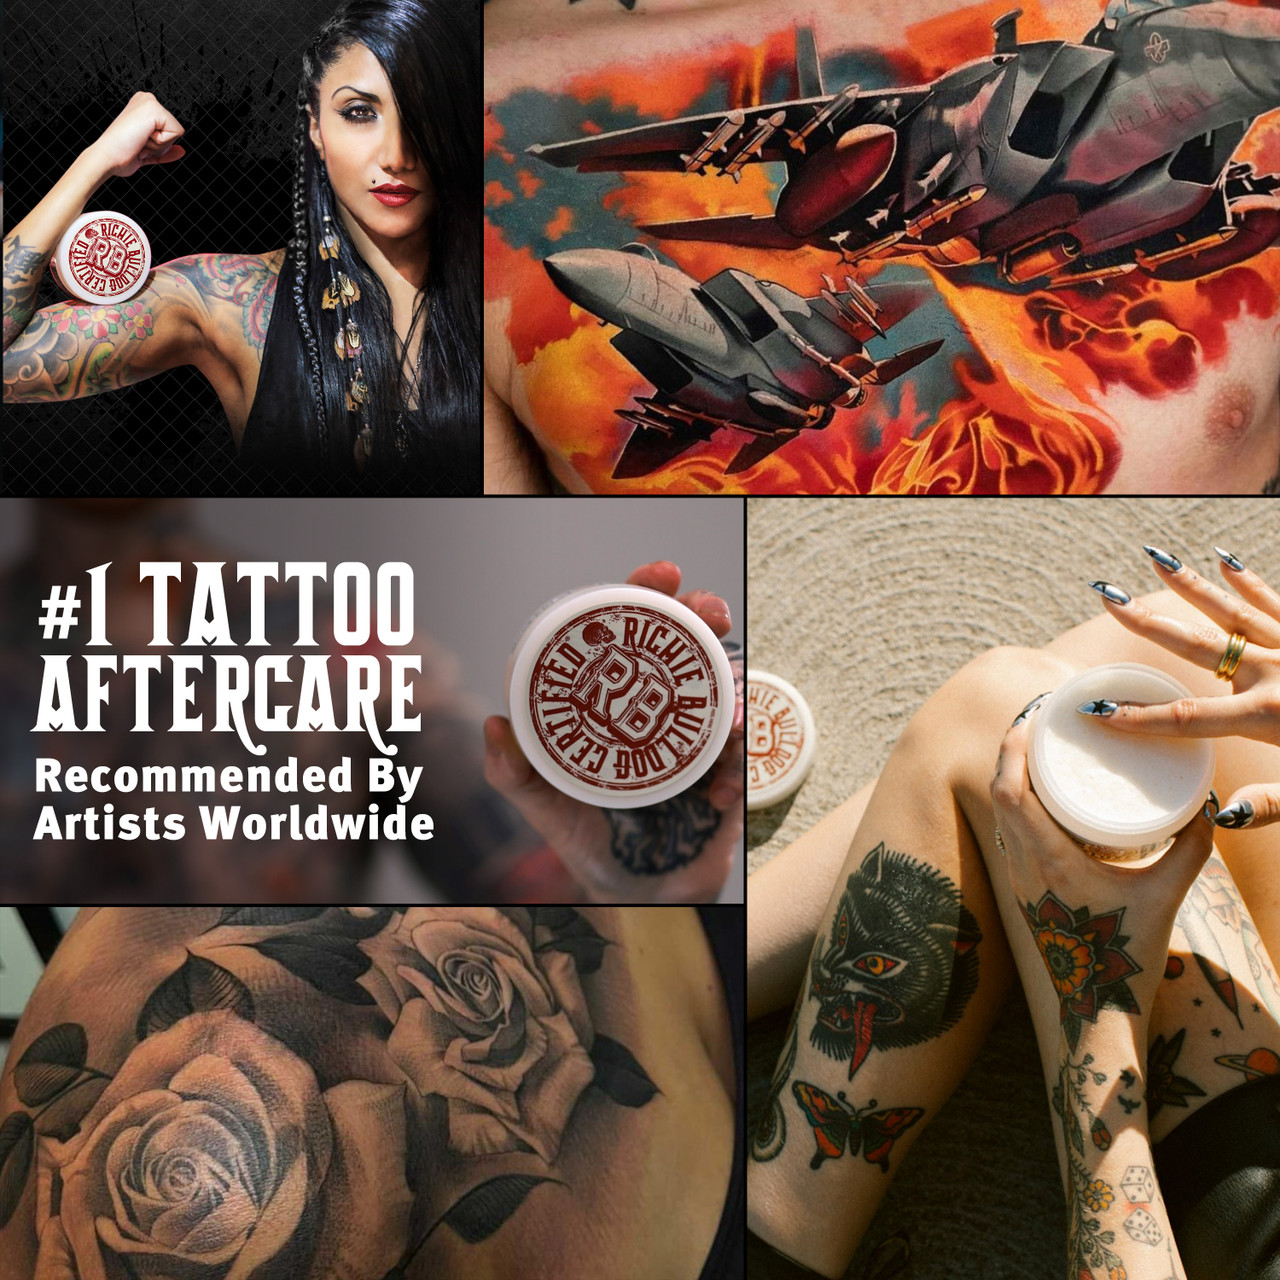 Most stunning butterfly tattoo design ideas and meaning | Butterfly wrist  tat | Butterfly arm tattoo | Arm tattoo, Body tattoos, Butterfly tattoo